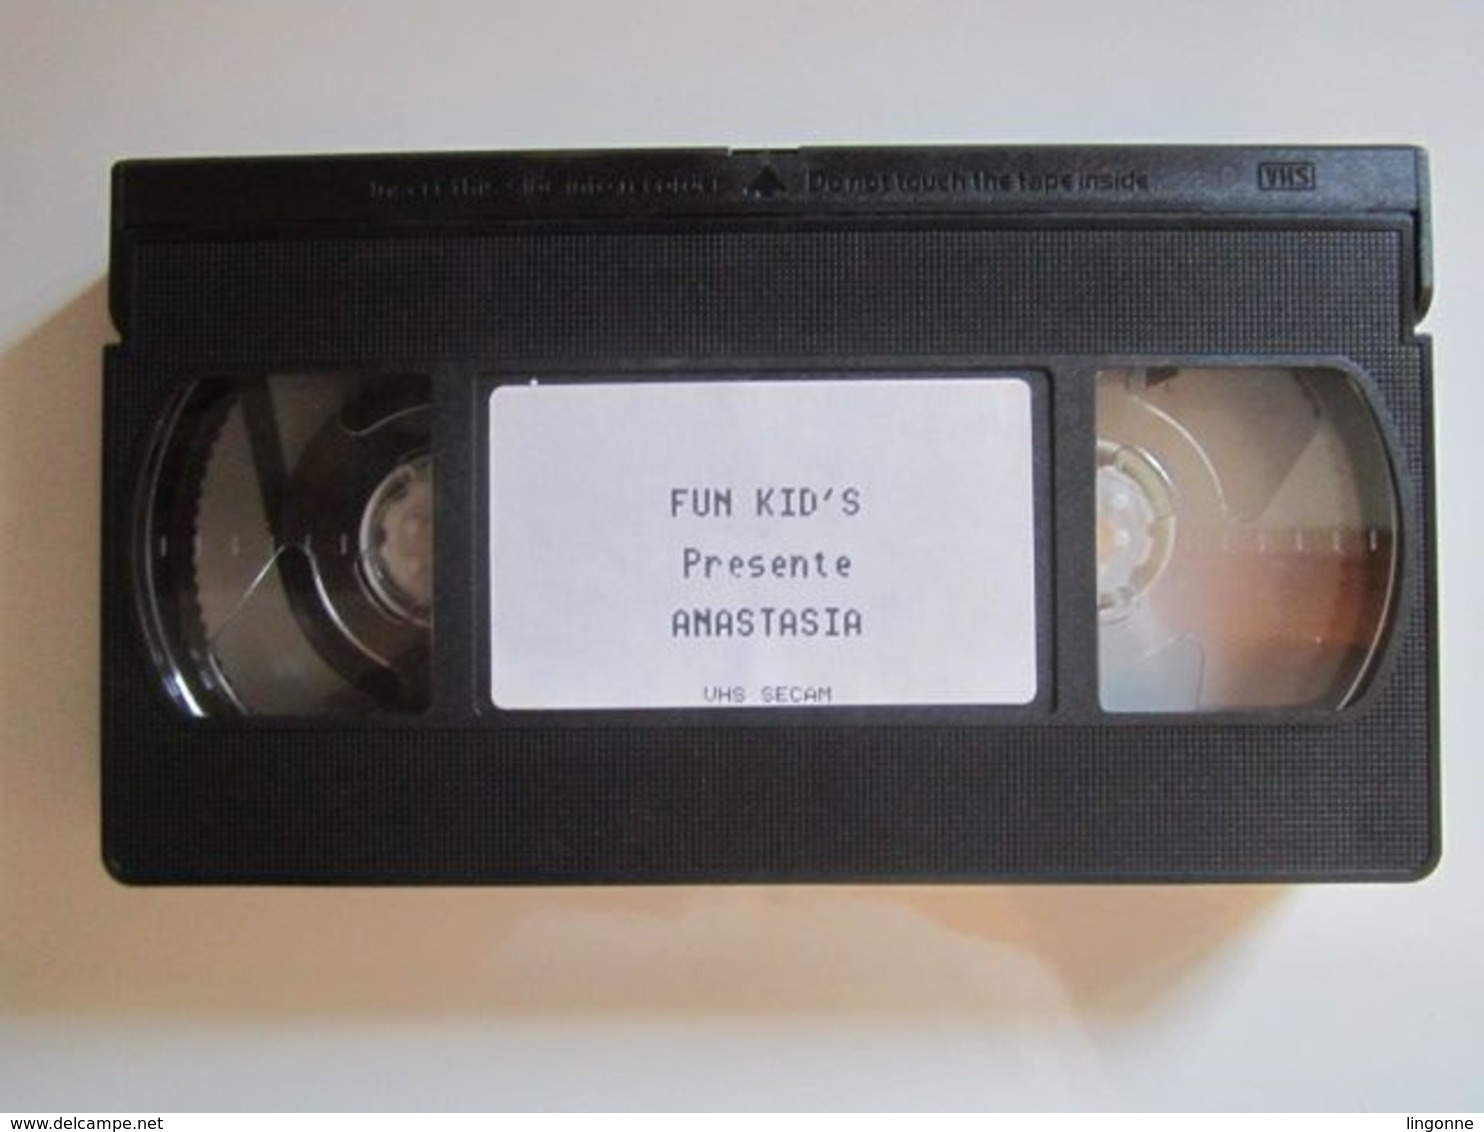 1998 CASSETTE VIDEO VHS  ANASTASIA - Dessins Animés